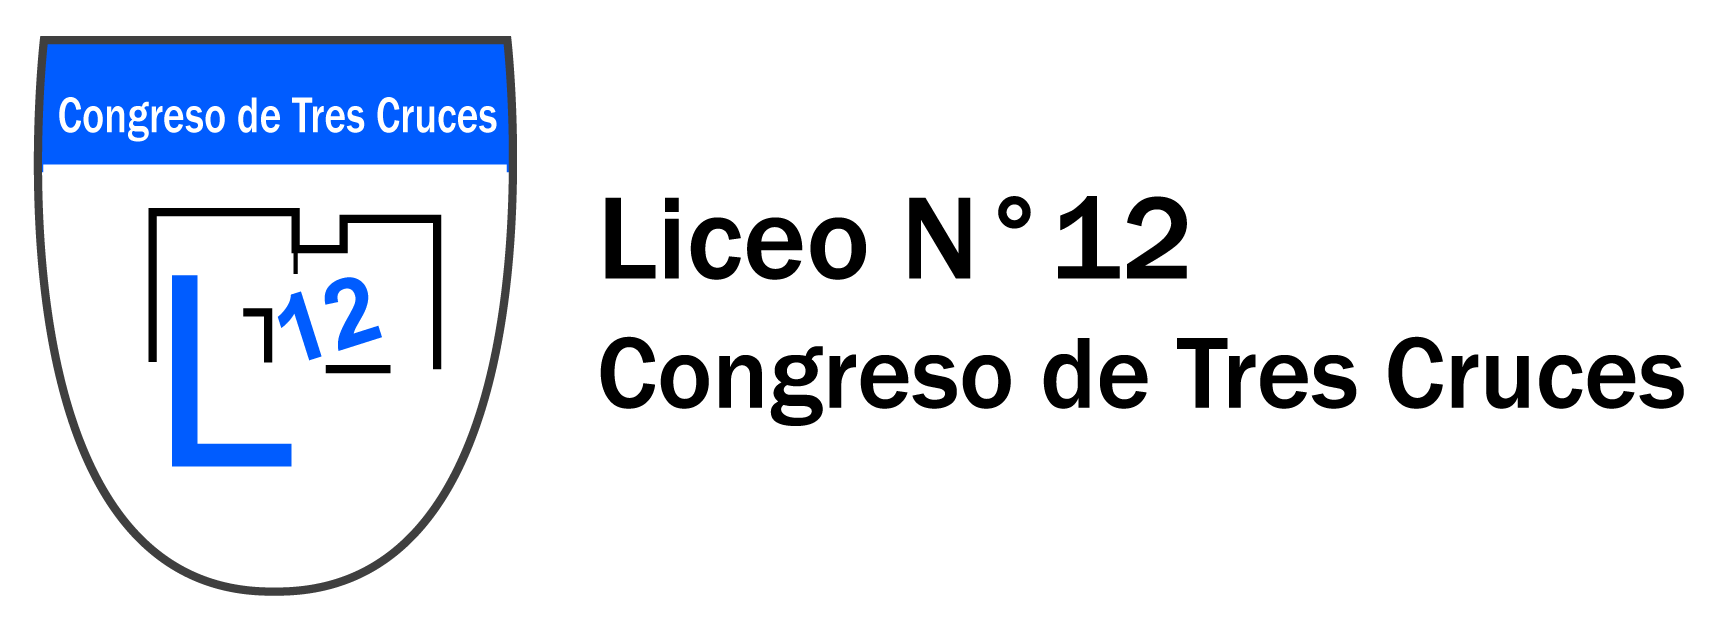 Logo liceo 12 congreso de tres cruces uruguay